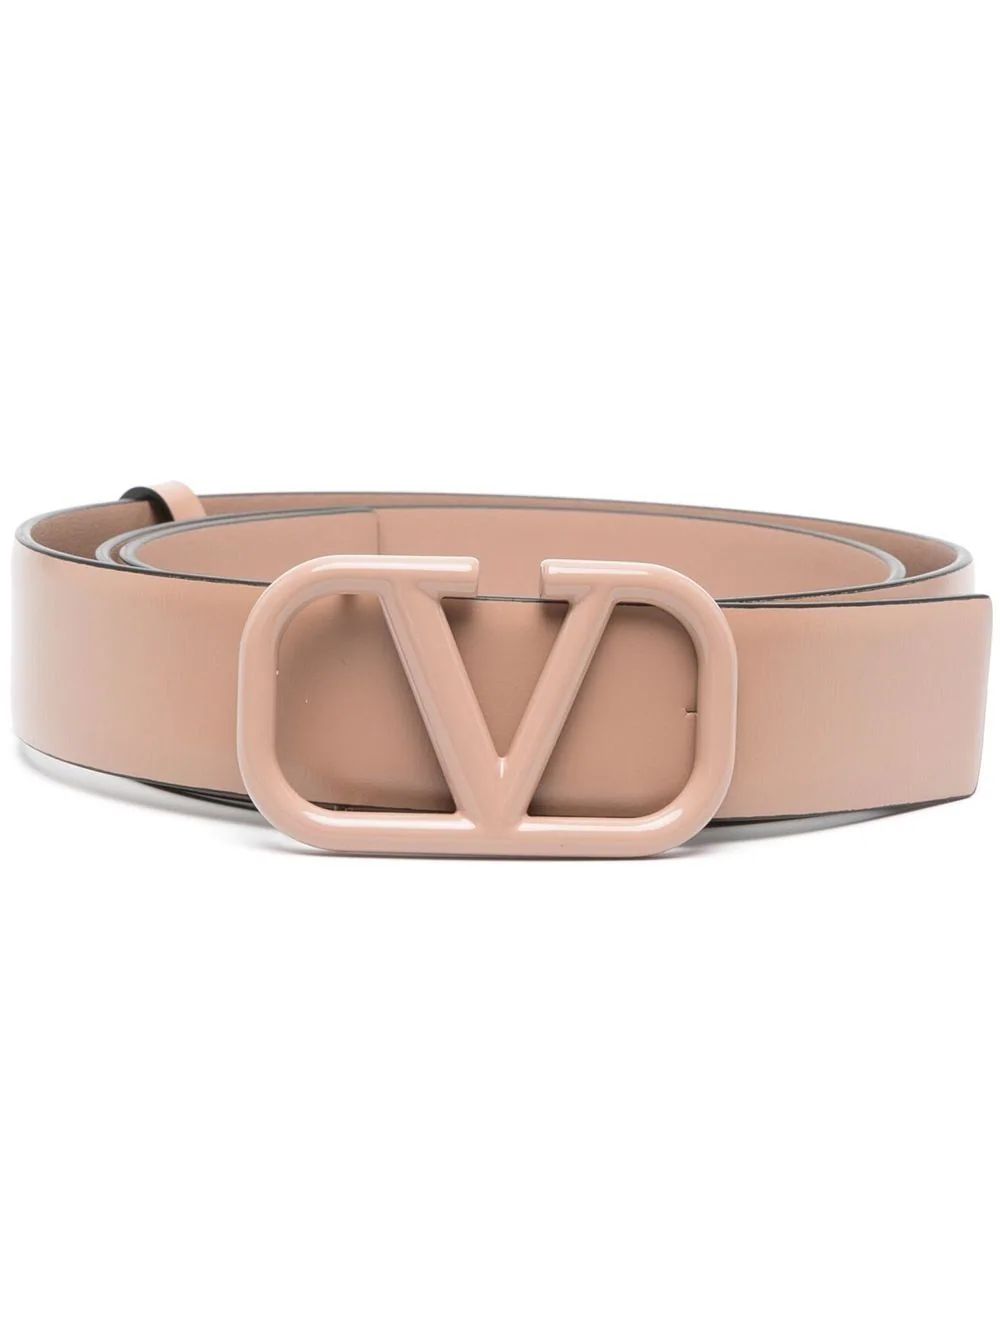 VLogo leather belt | Farfetch Global